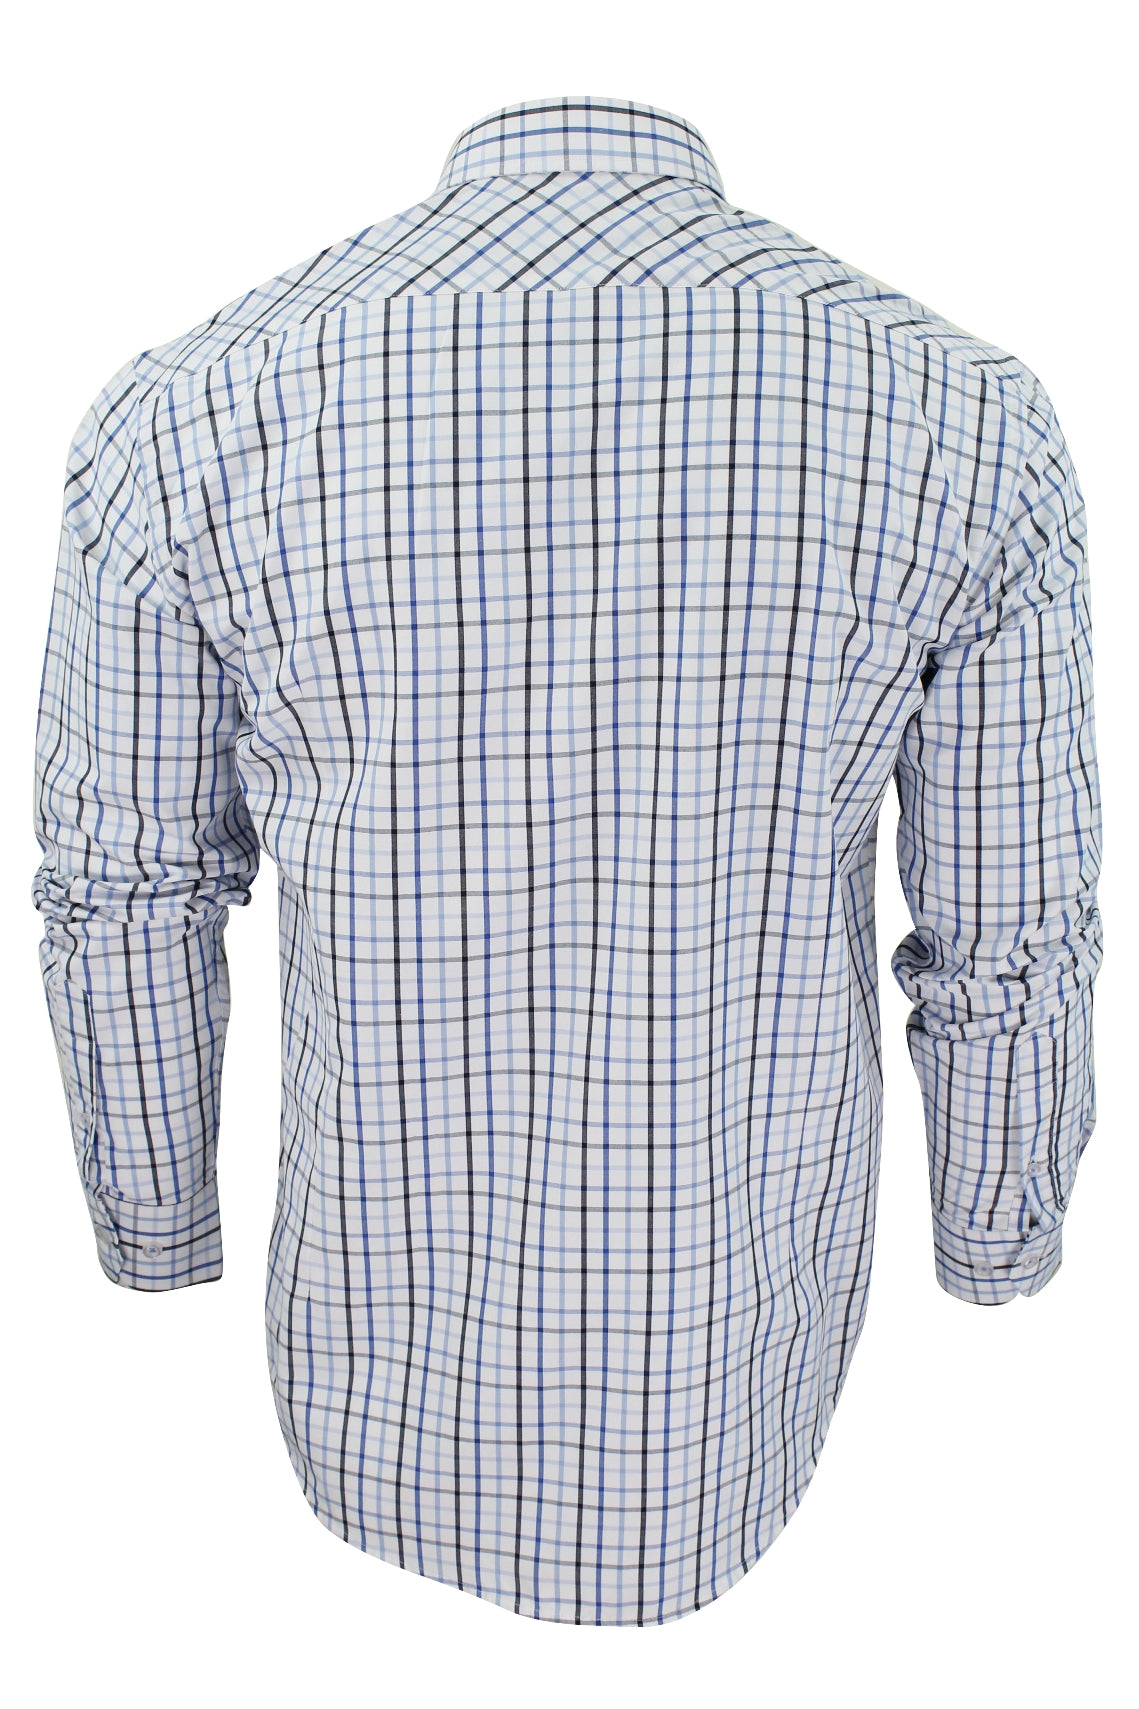 Mens Long Sleeved Check Shirt by Xact Clothing-3